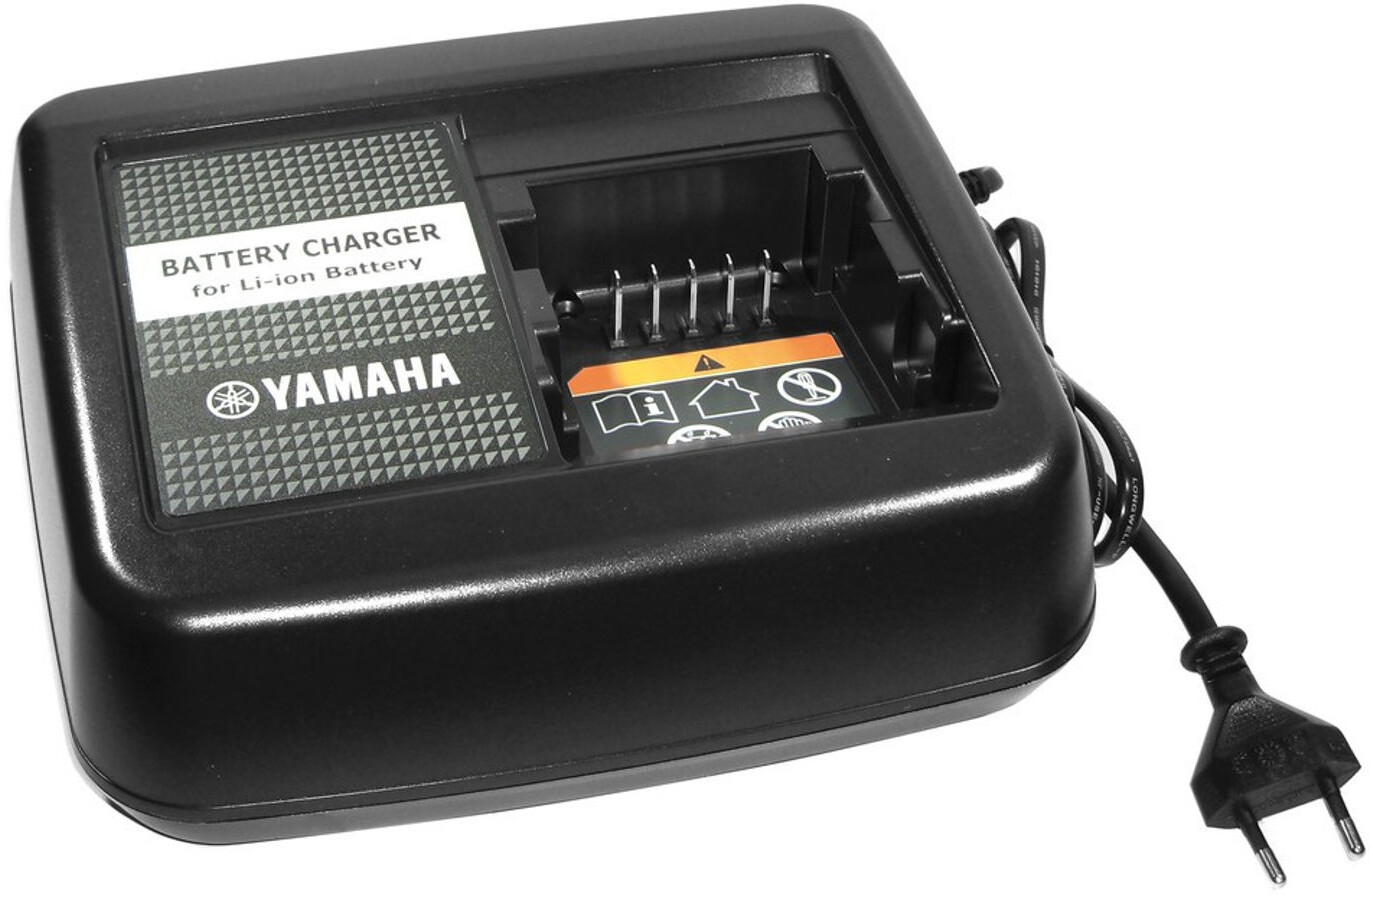 Yamaha Bicycle Battery. Зарядное устройство Yamaha. Стационарная зарядка. Батарея Yamaha для велосипеда. Зарядка стационарная